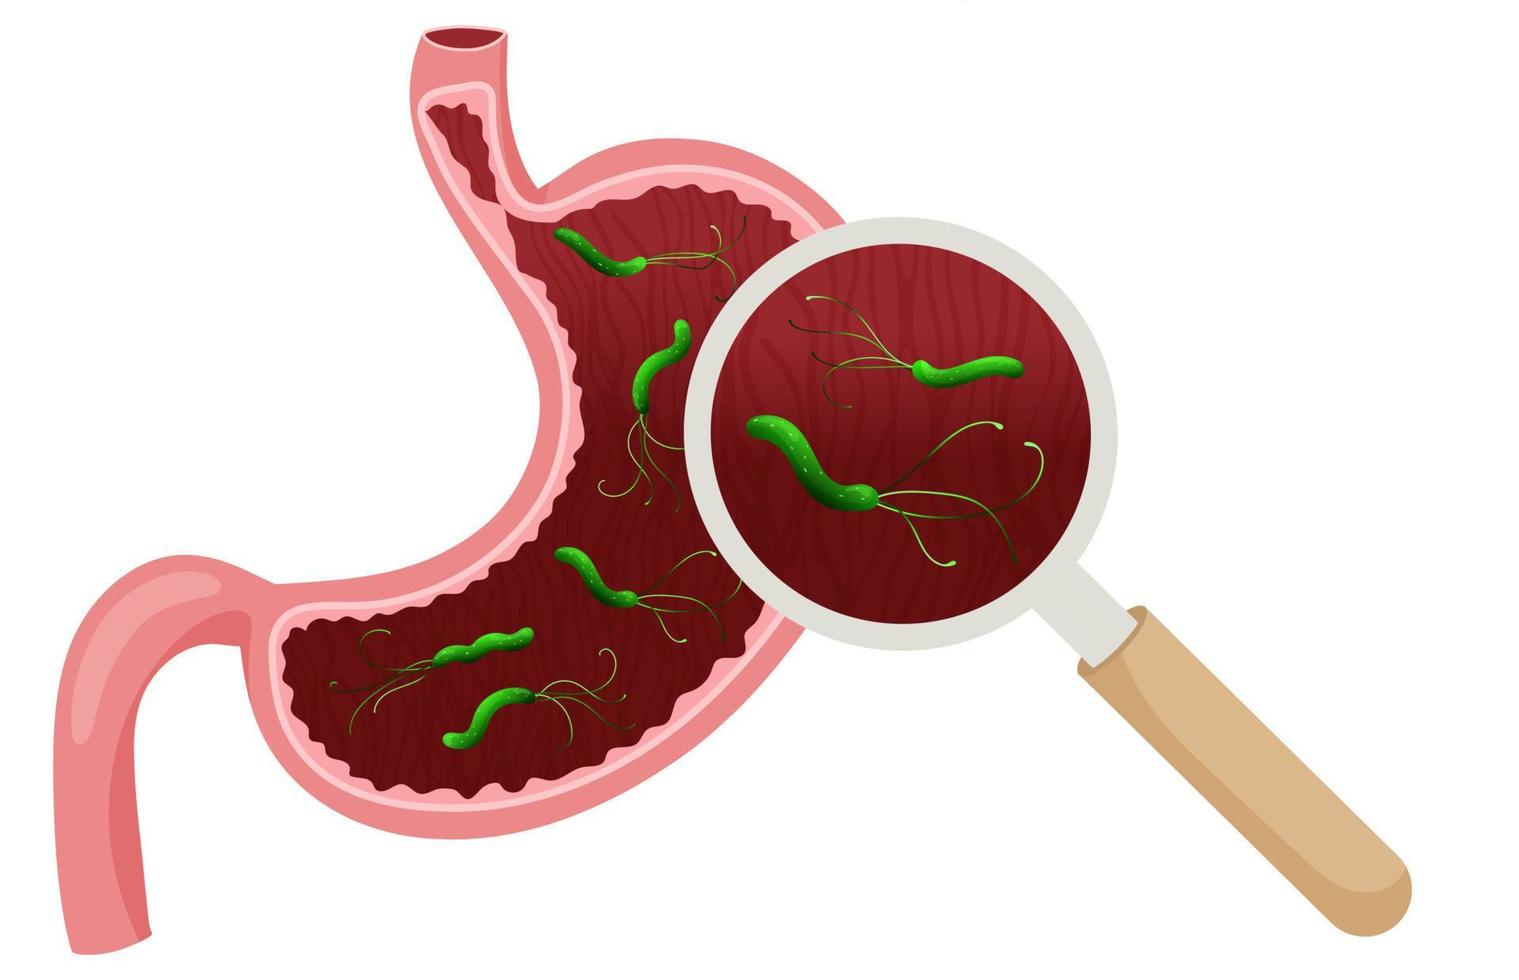 helicobacter pylori i tömma mage under förstorande glas. vektor illustration, tecknad serie stil